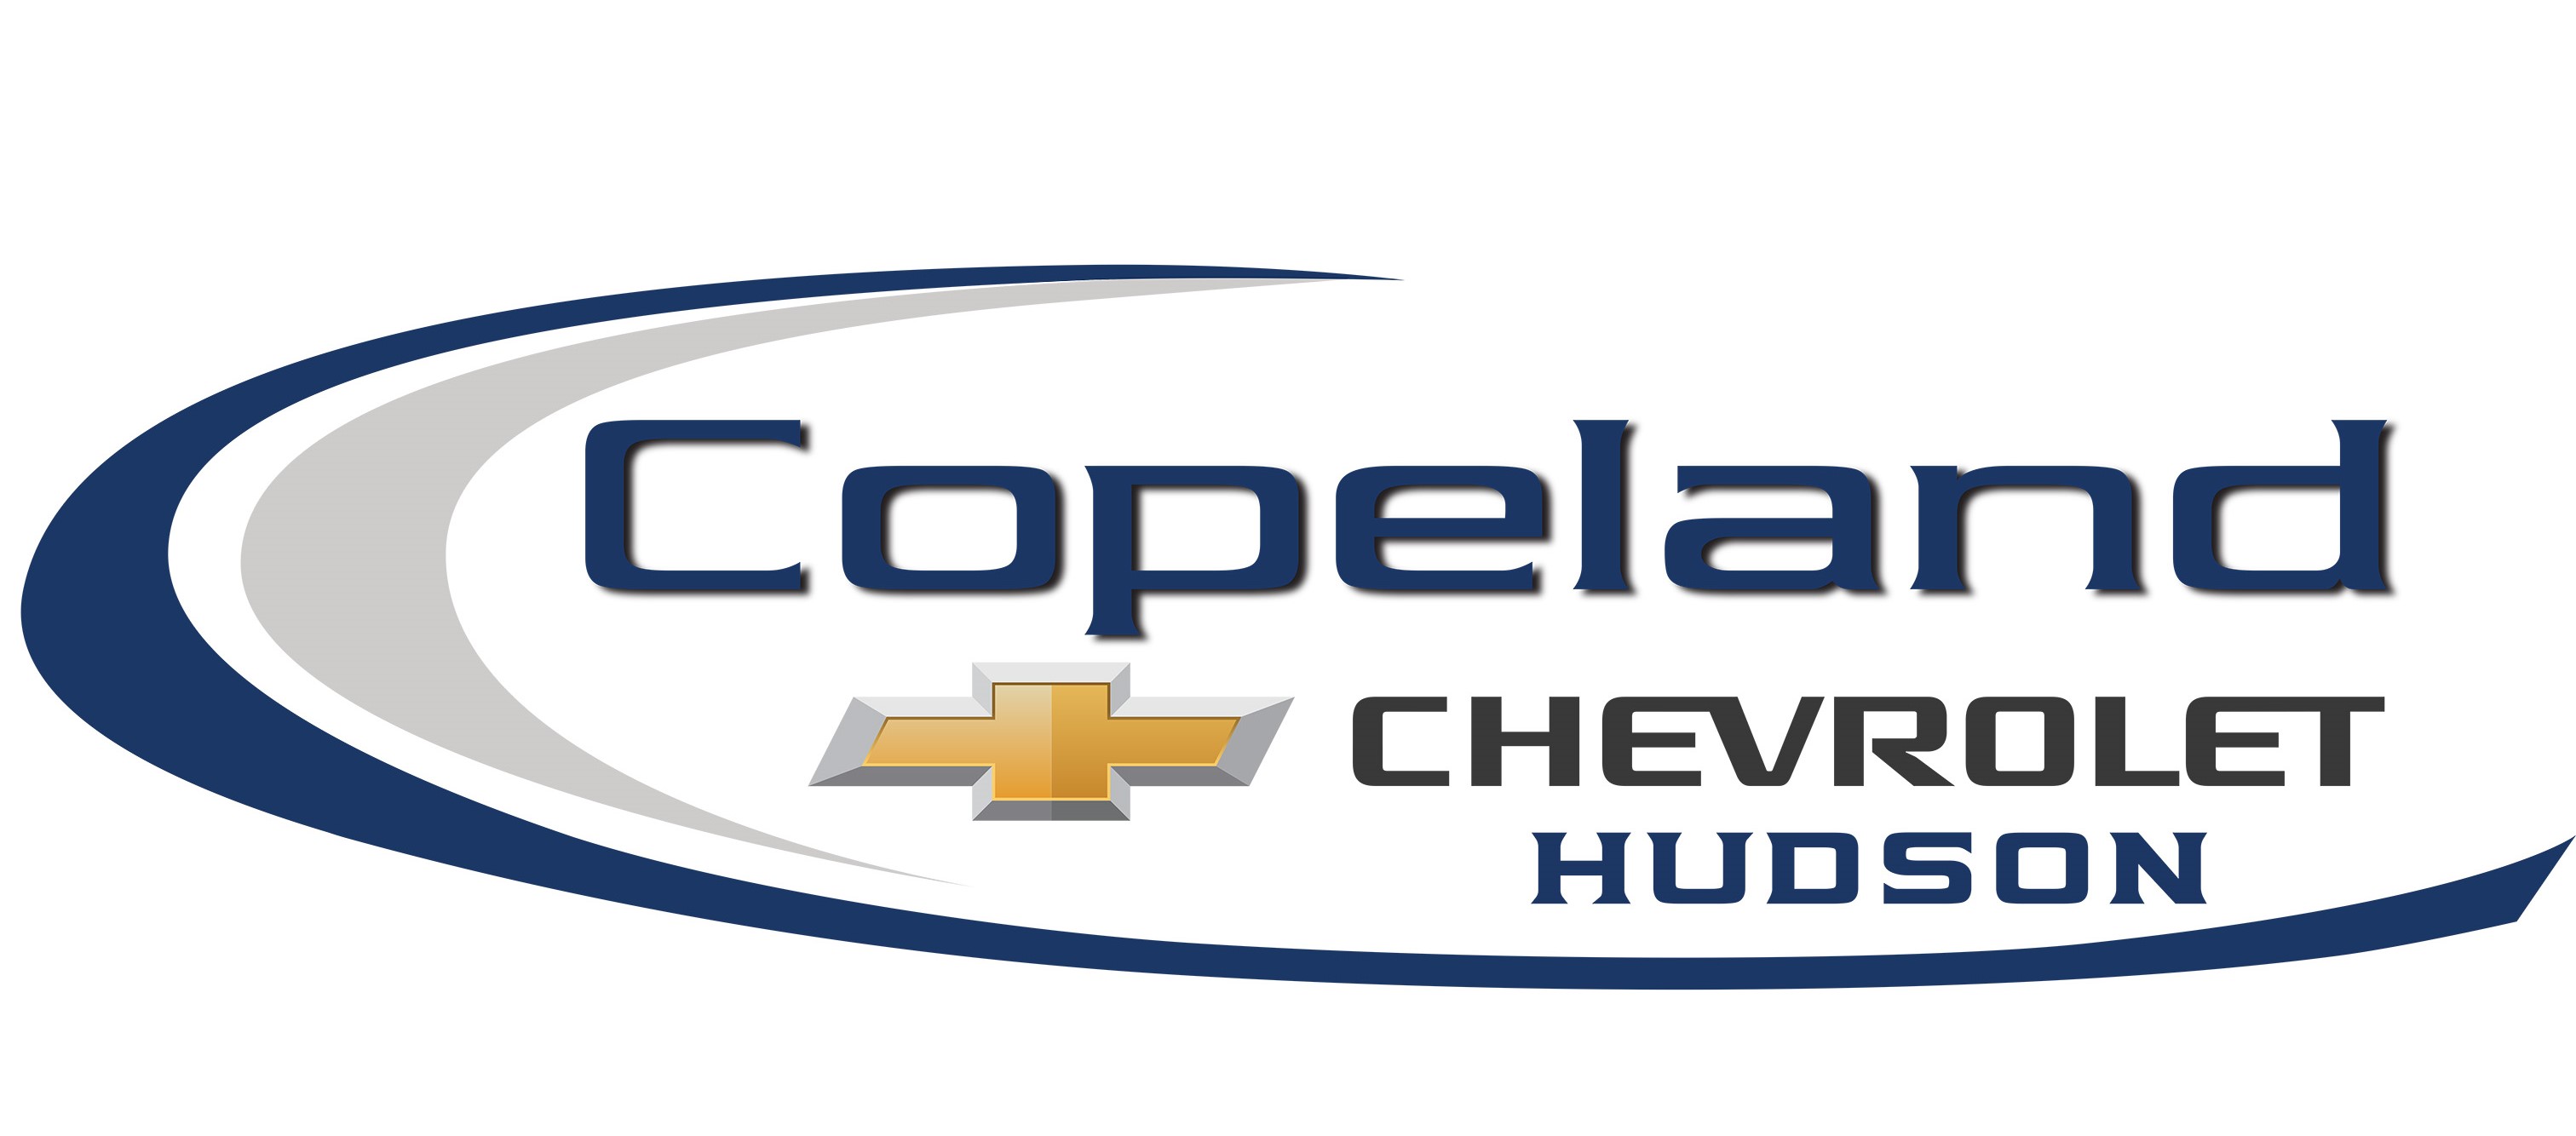 Copeland Chevrolet Hudson